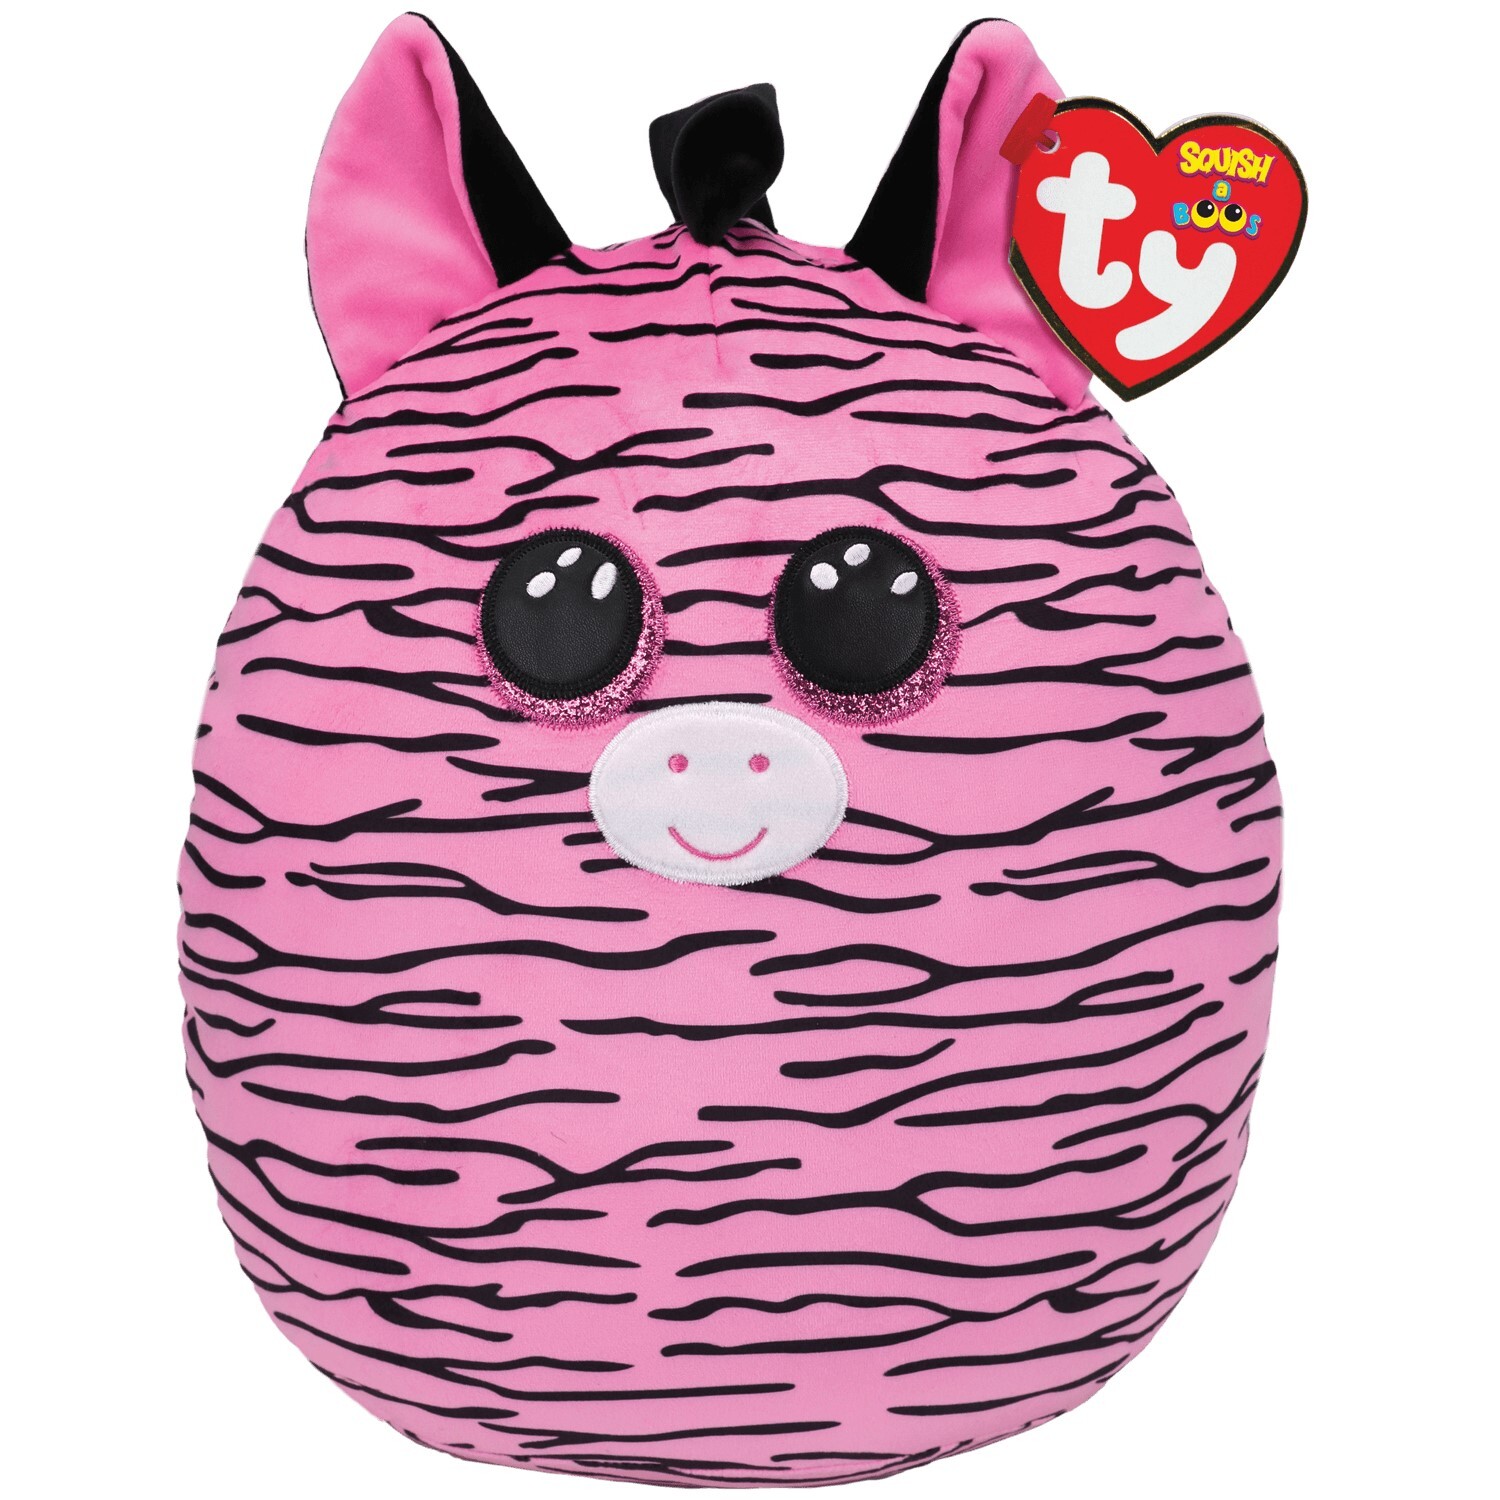 Beanie Boos Squish-a-Boo - Zoey the Pink Zebra